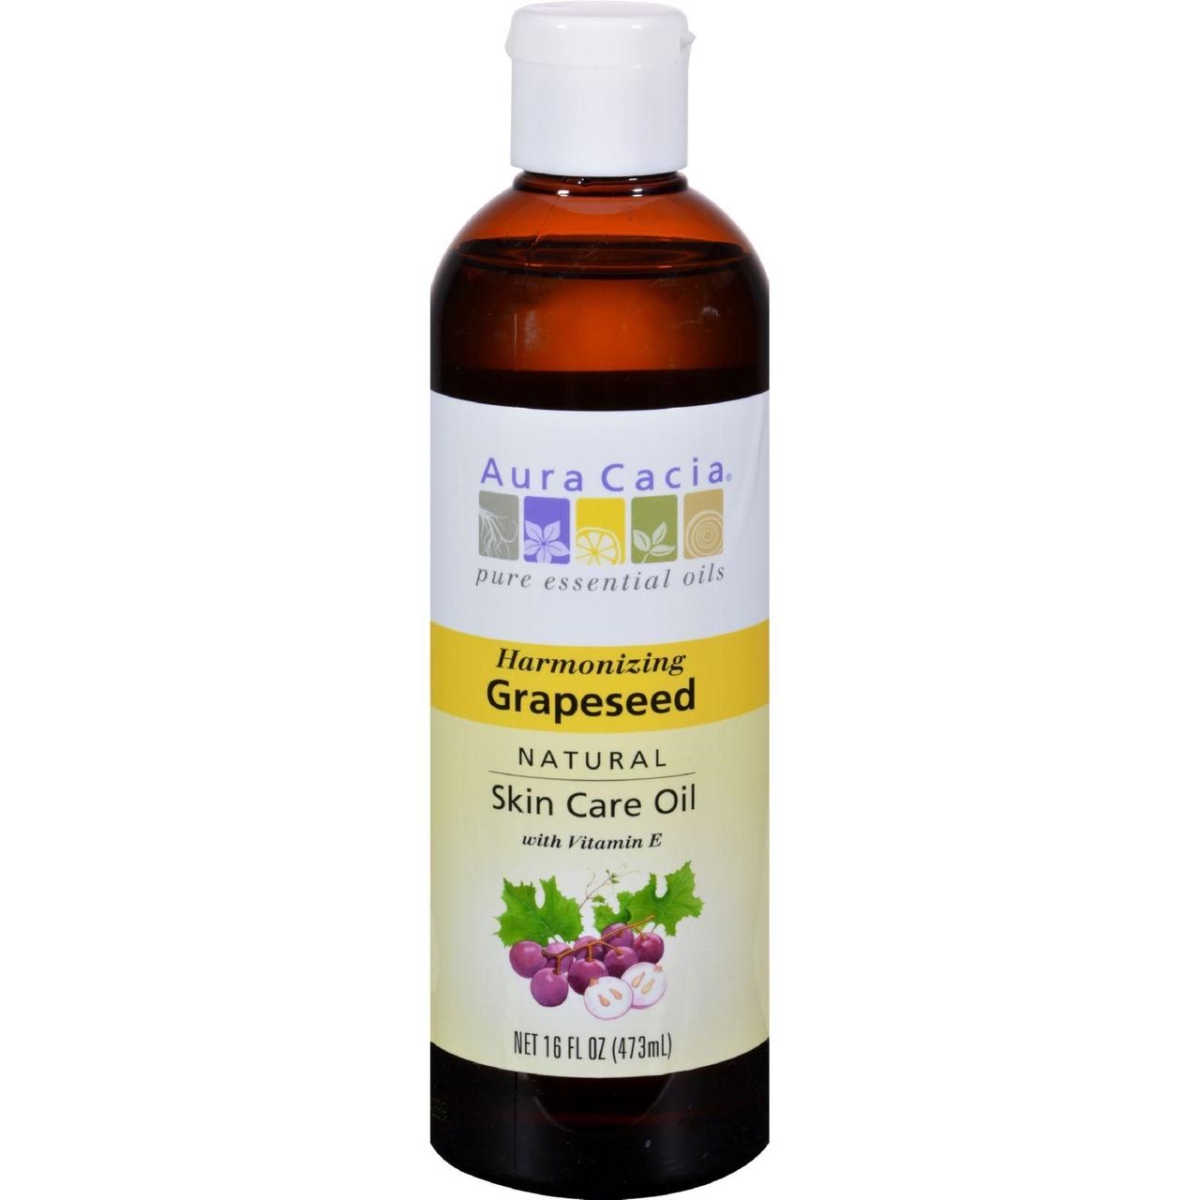 Hg0127431 16 Fl Oz Natural Skin Care Oil, Grapeseed